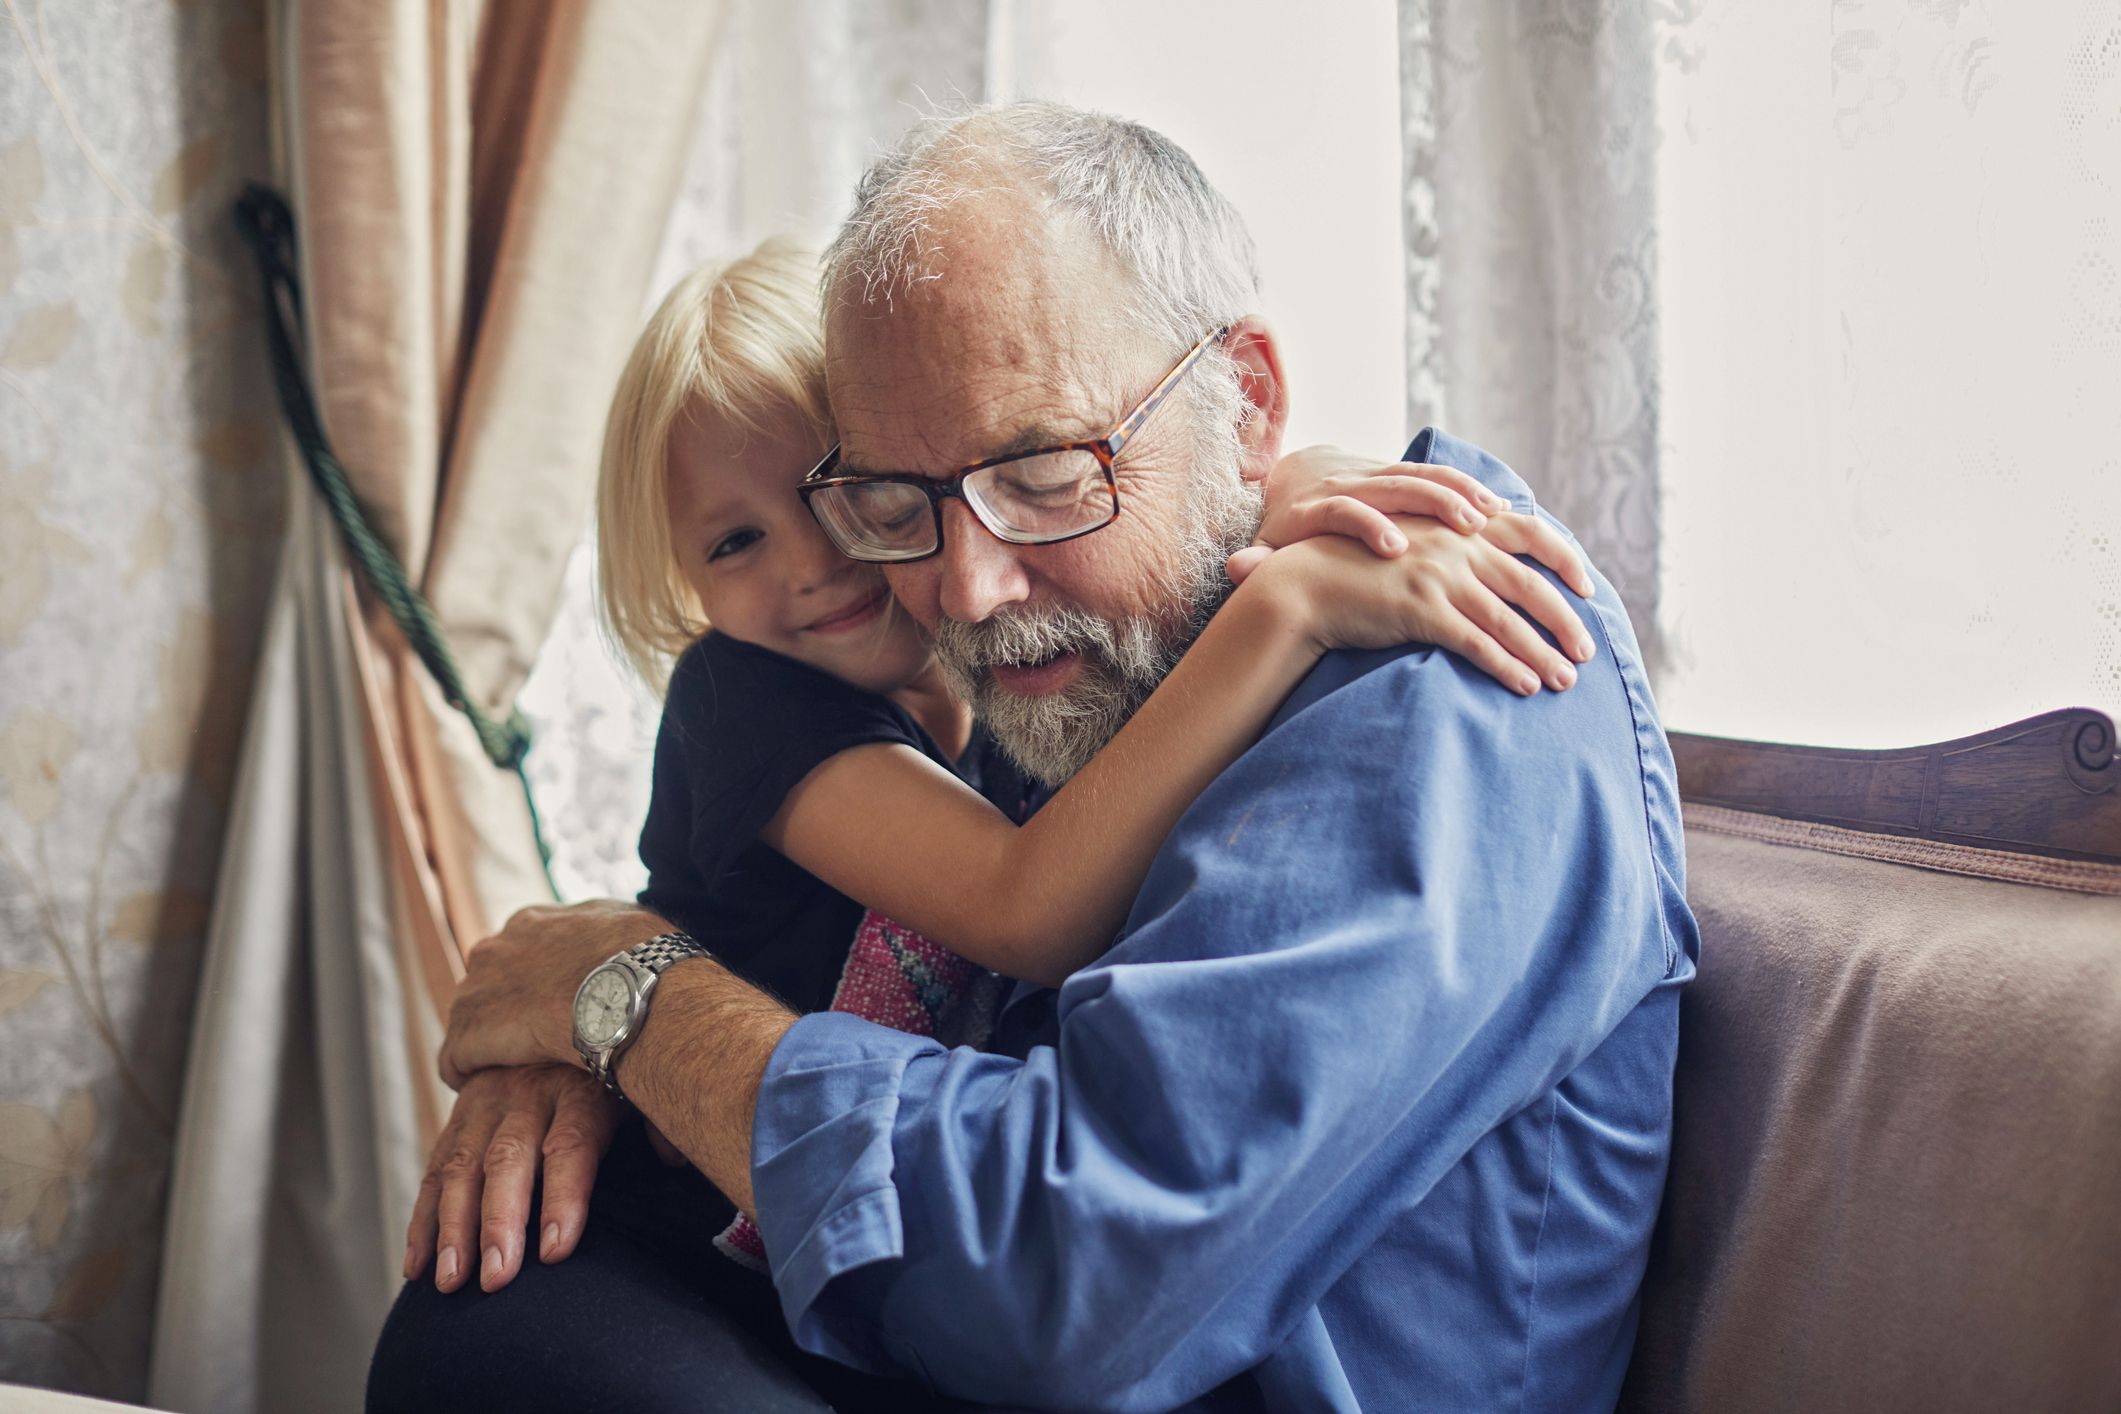 A grandfather hugging his grandchild. | Source: Shutterstock